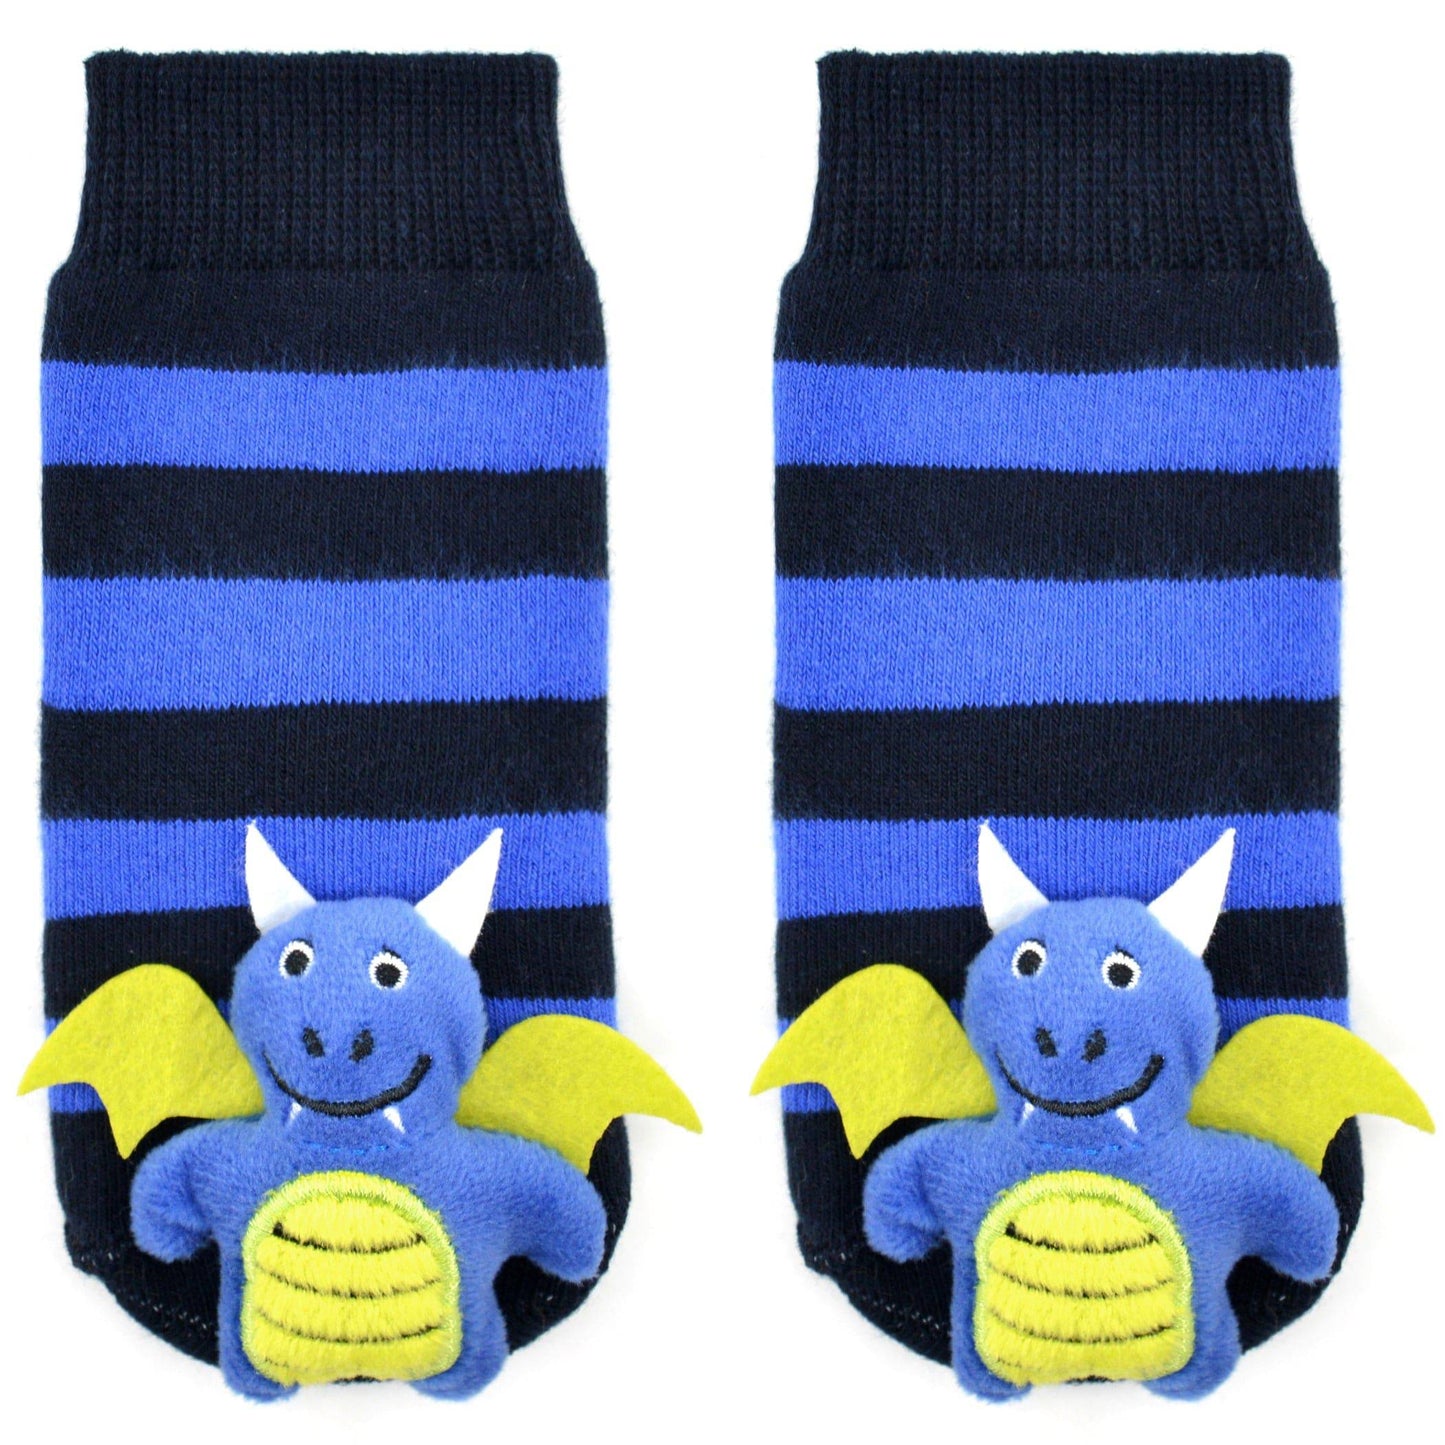 Boogie Toes - Blue Dragon Socks